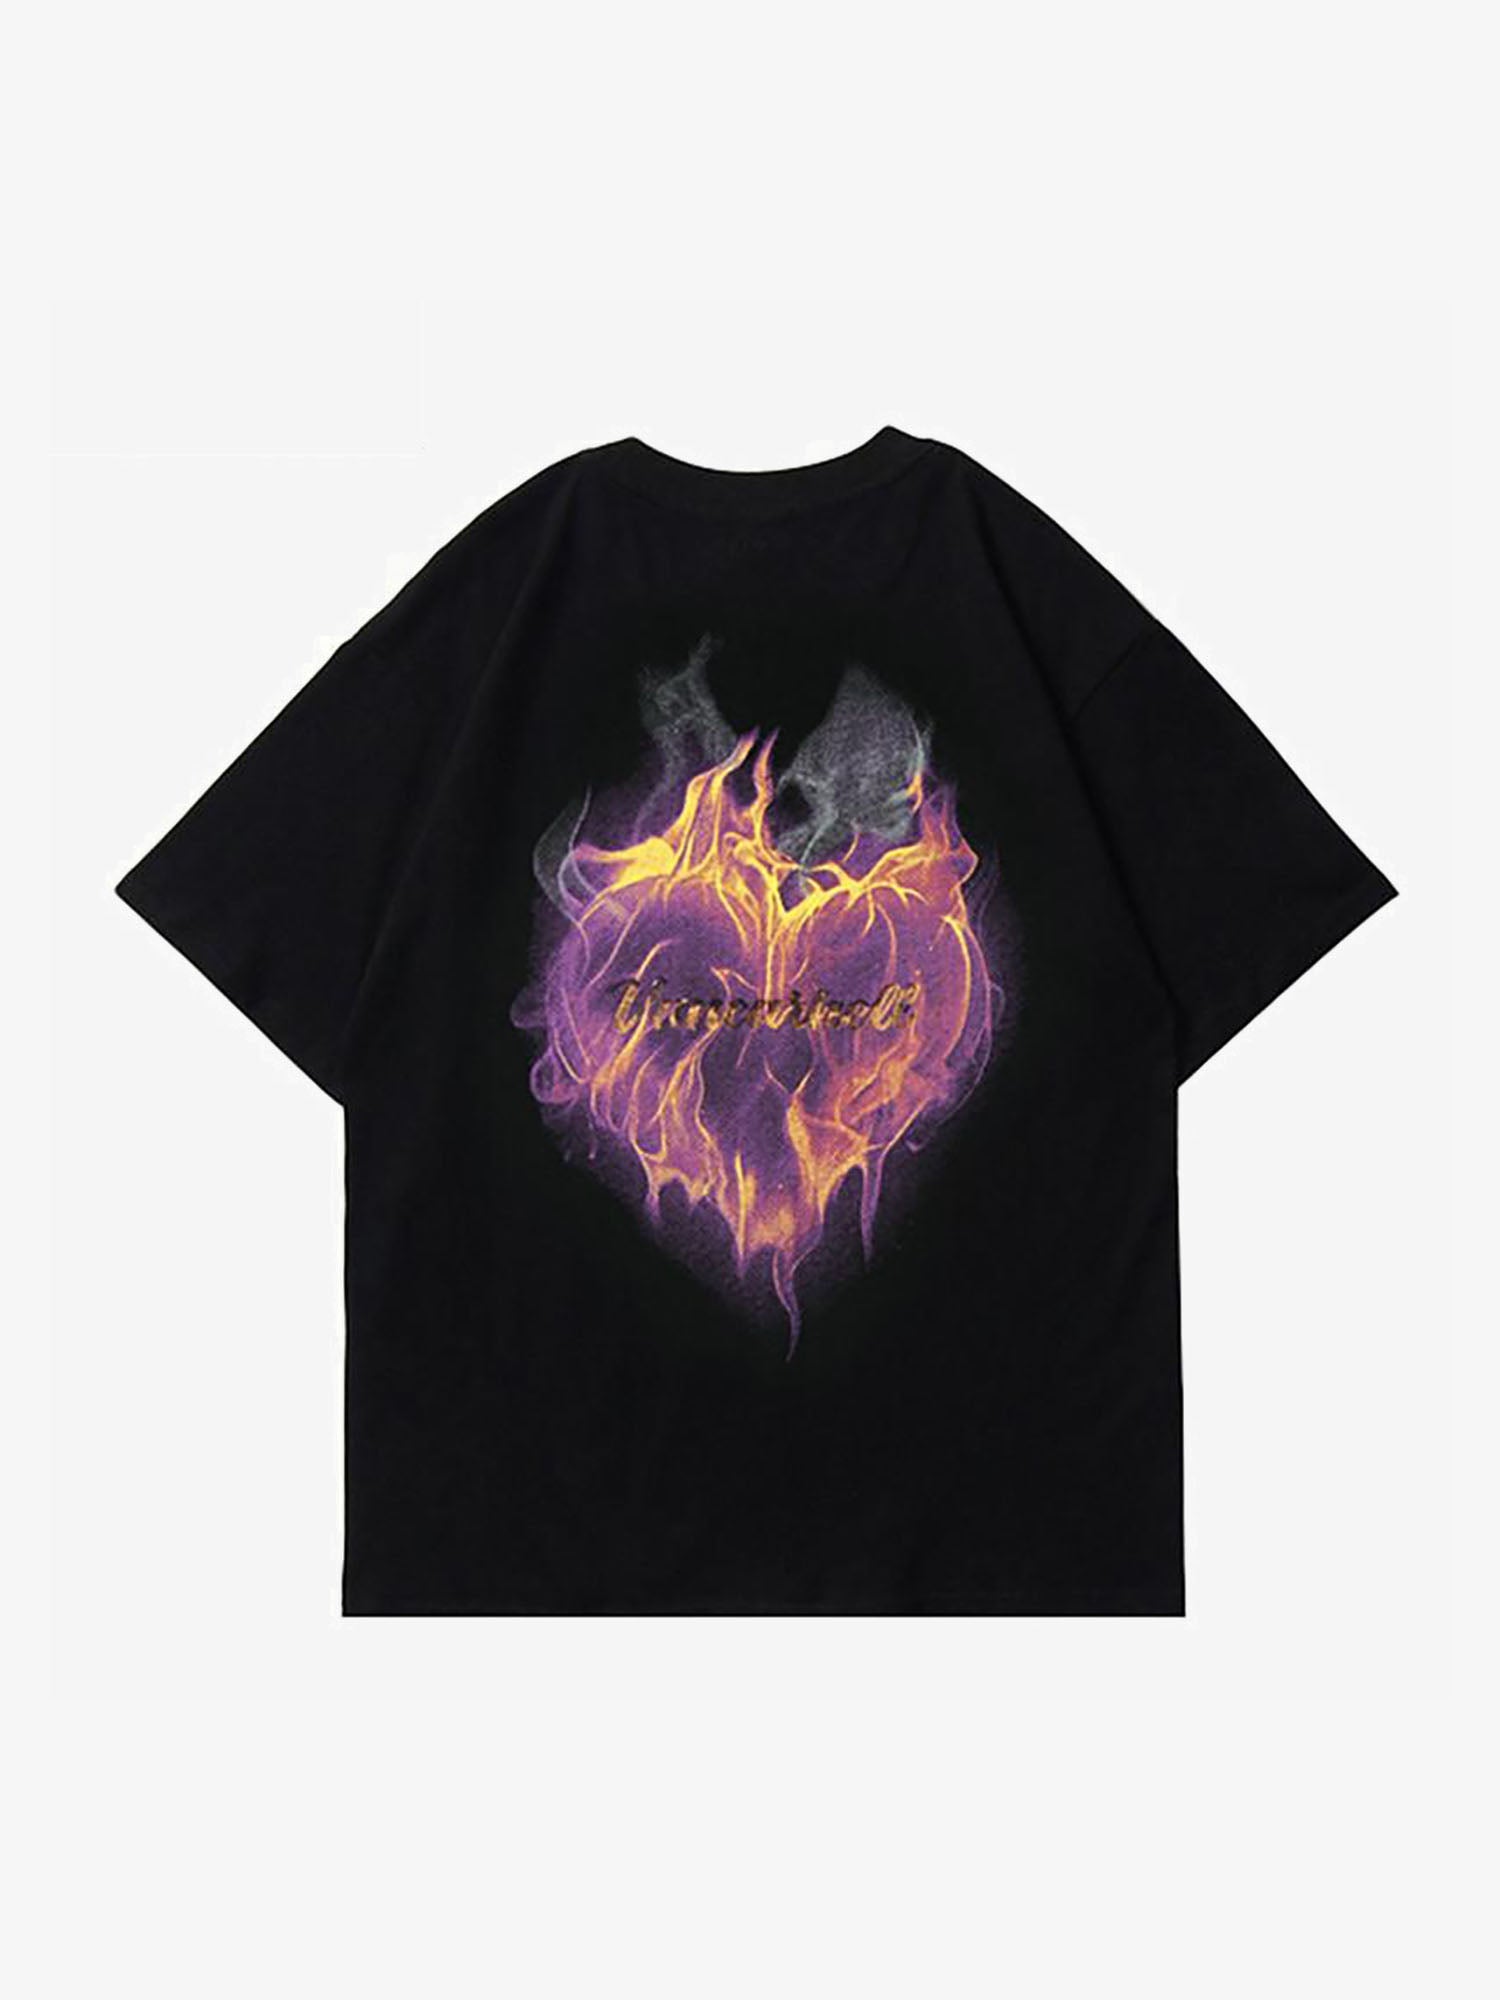 JUSTNOTAG Heart-Shaped Flame Burning Print Short Sleeve Tee